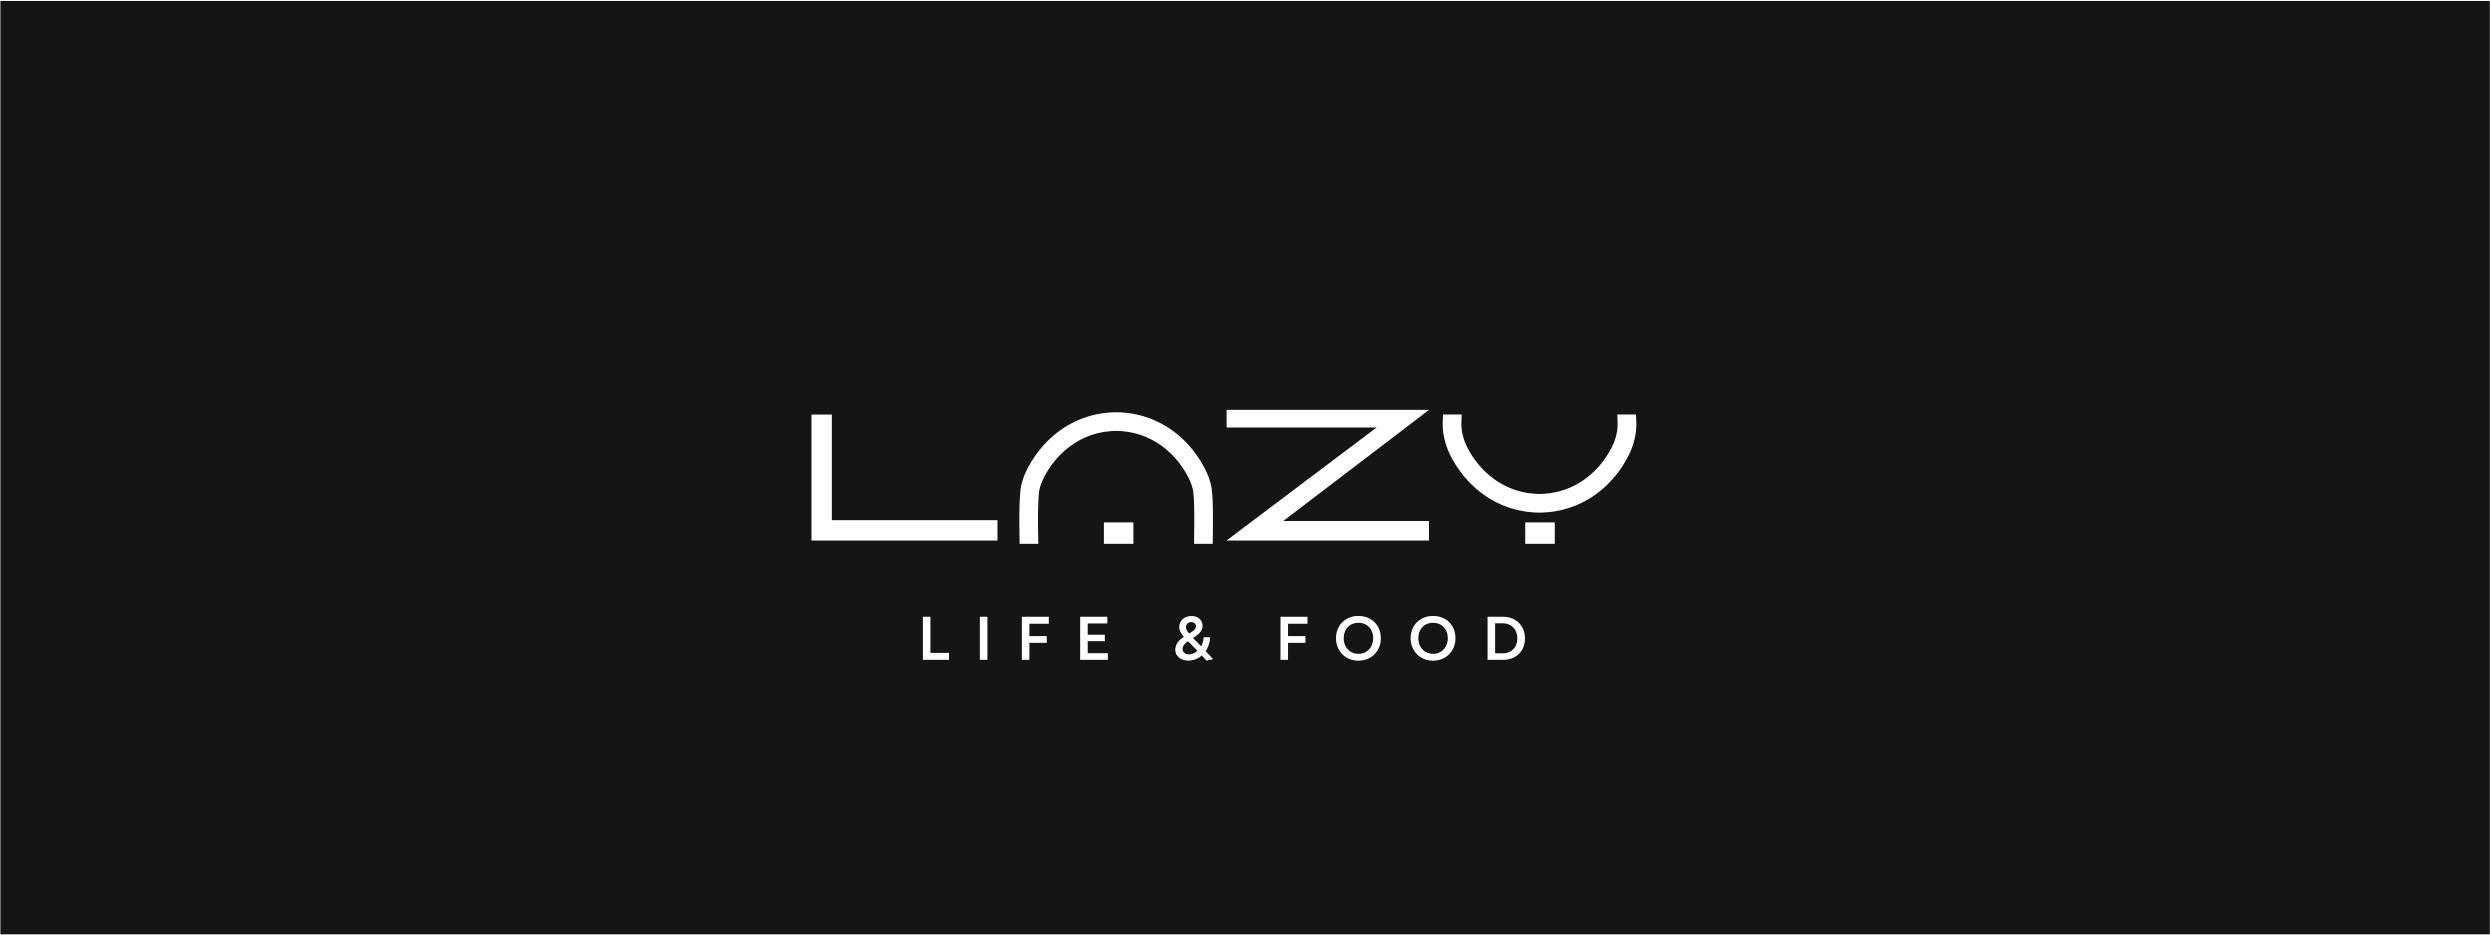 Restaurant Lazy Life